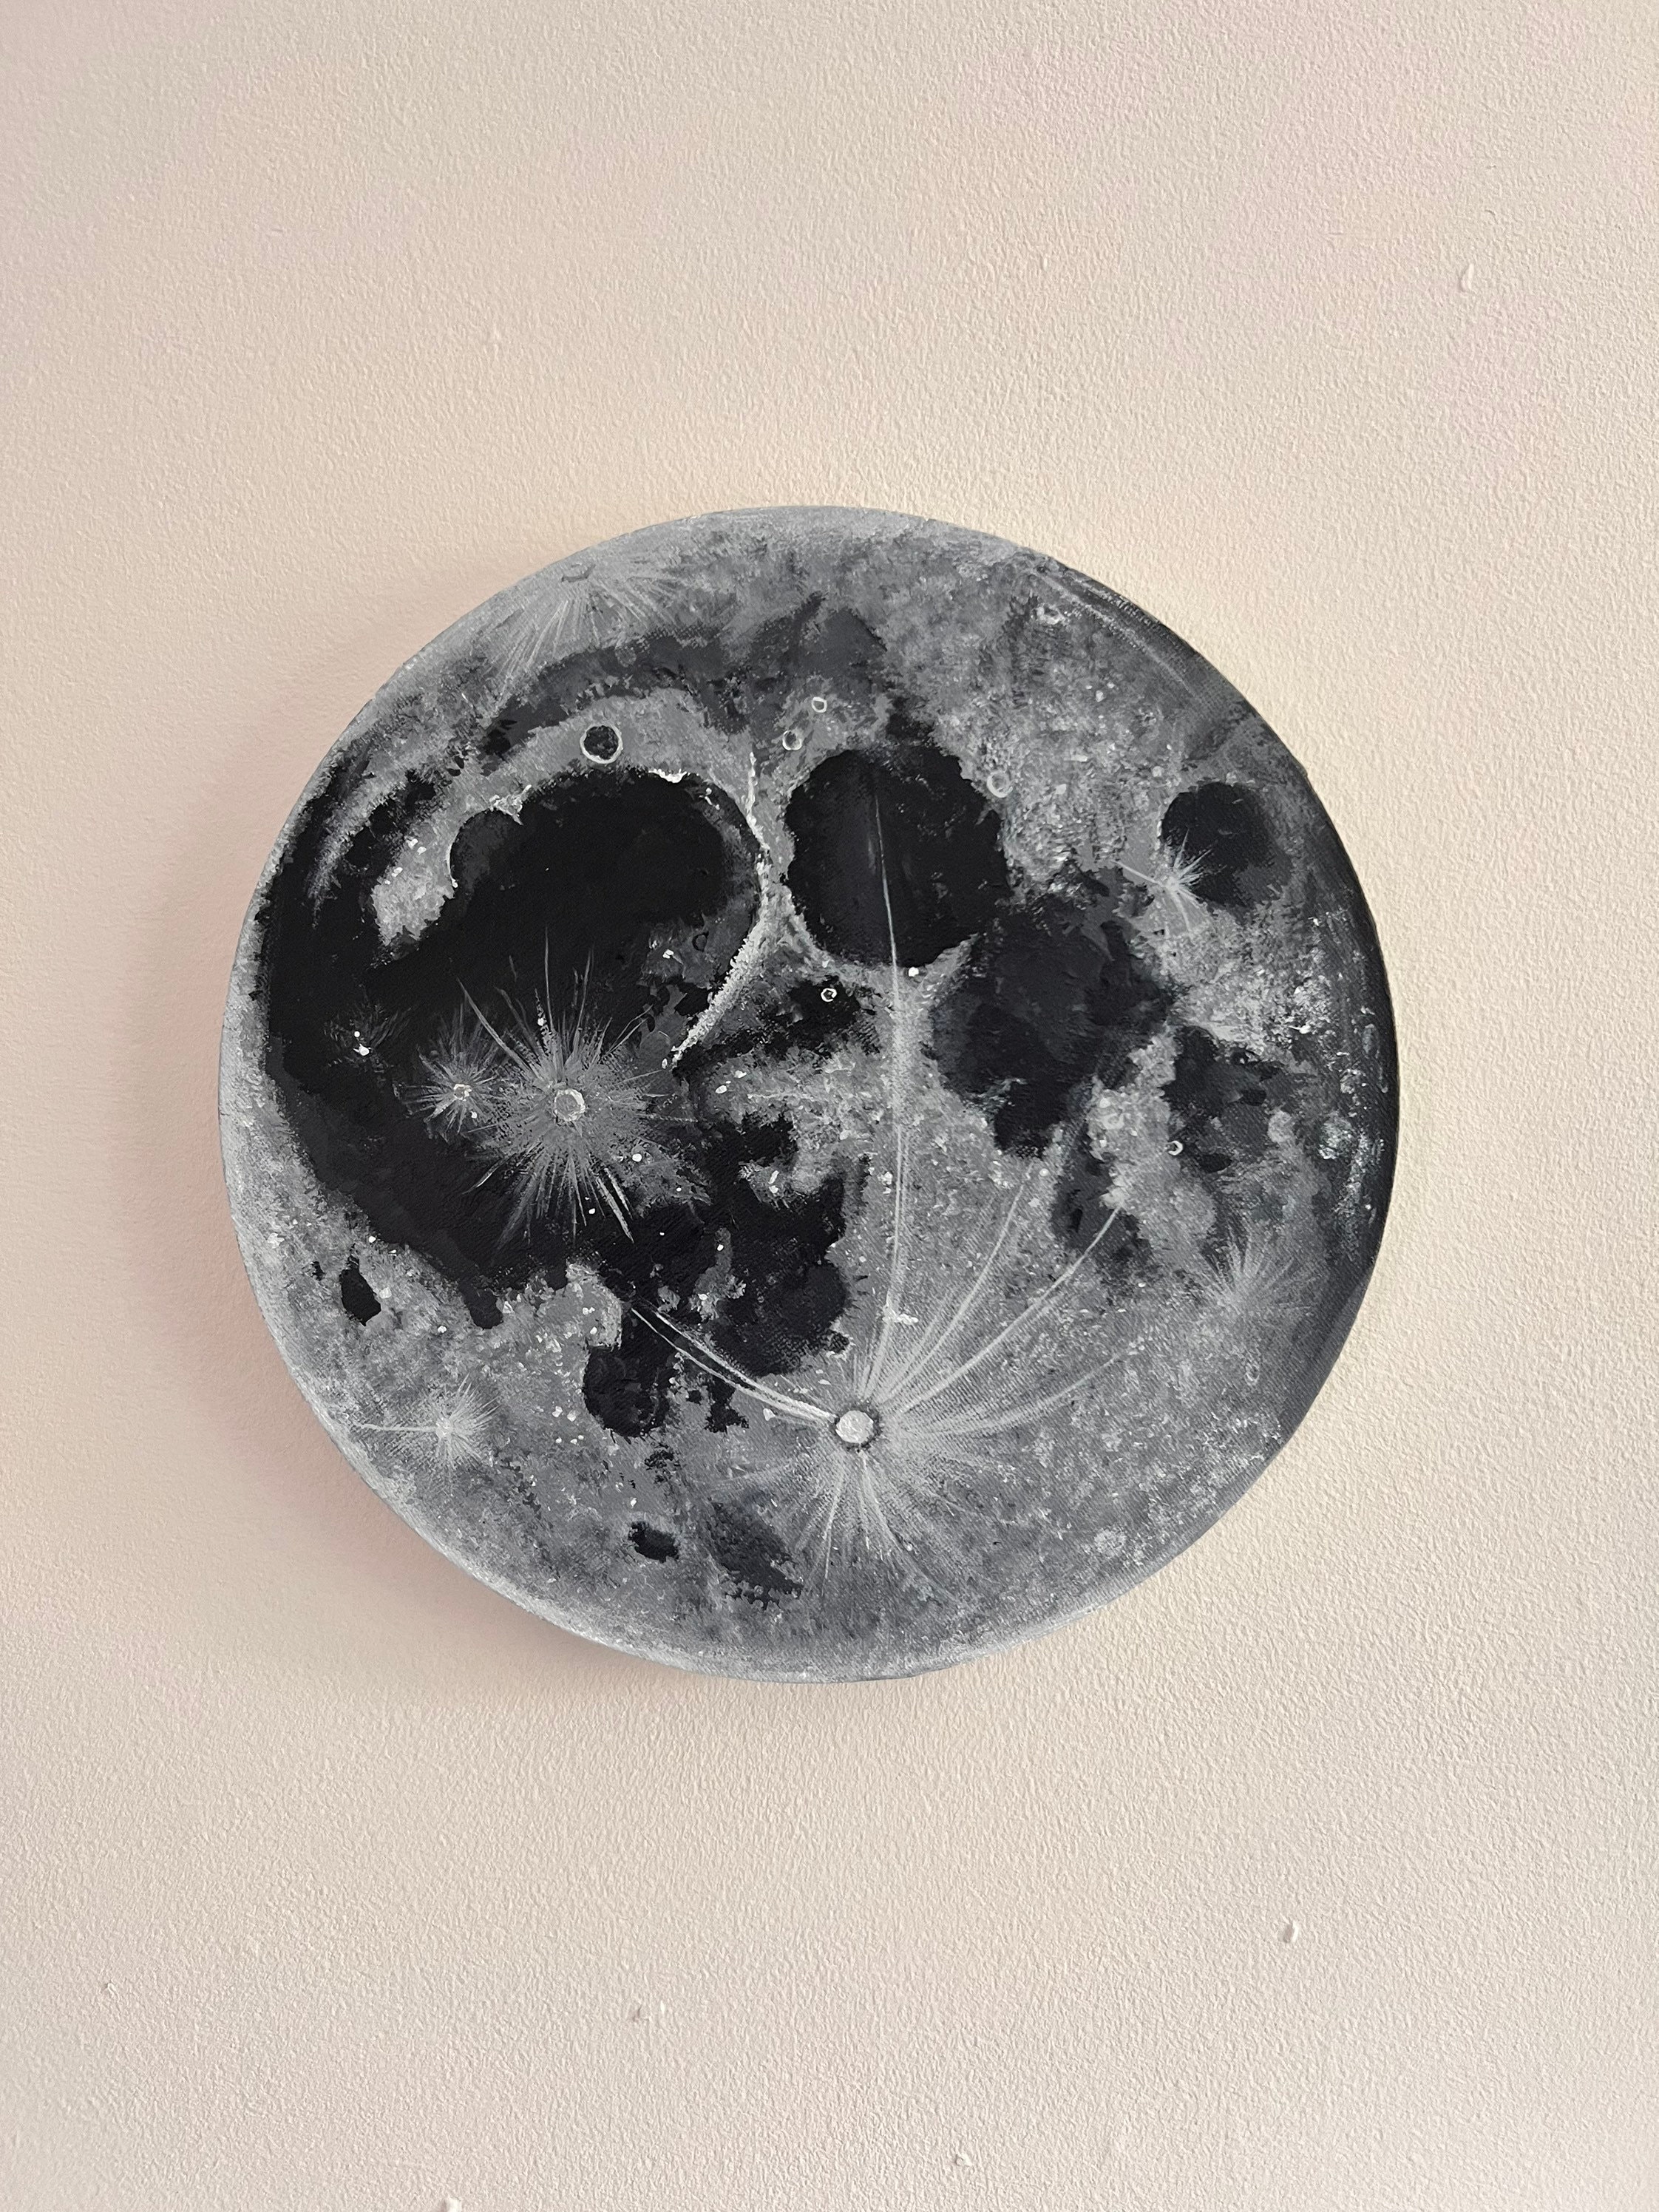 Original Full Moon Circle Canvas Painting, Acrylic on Cotton Canvas 